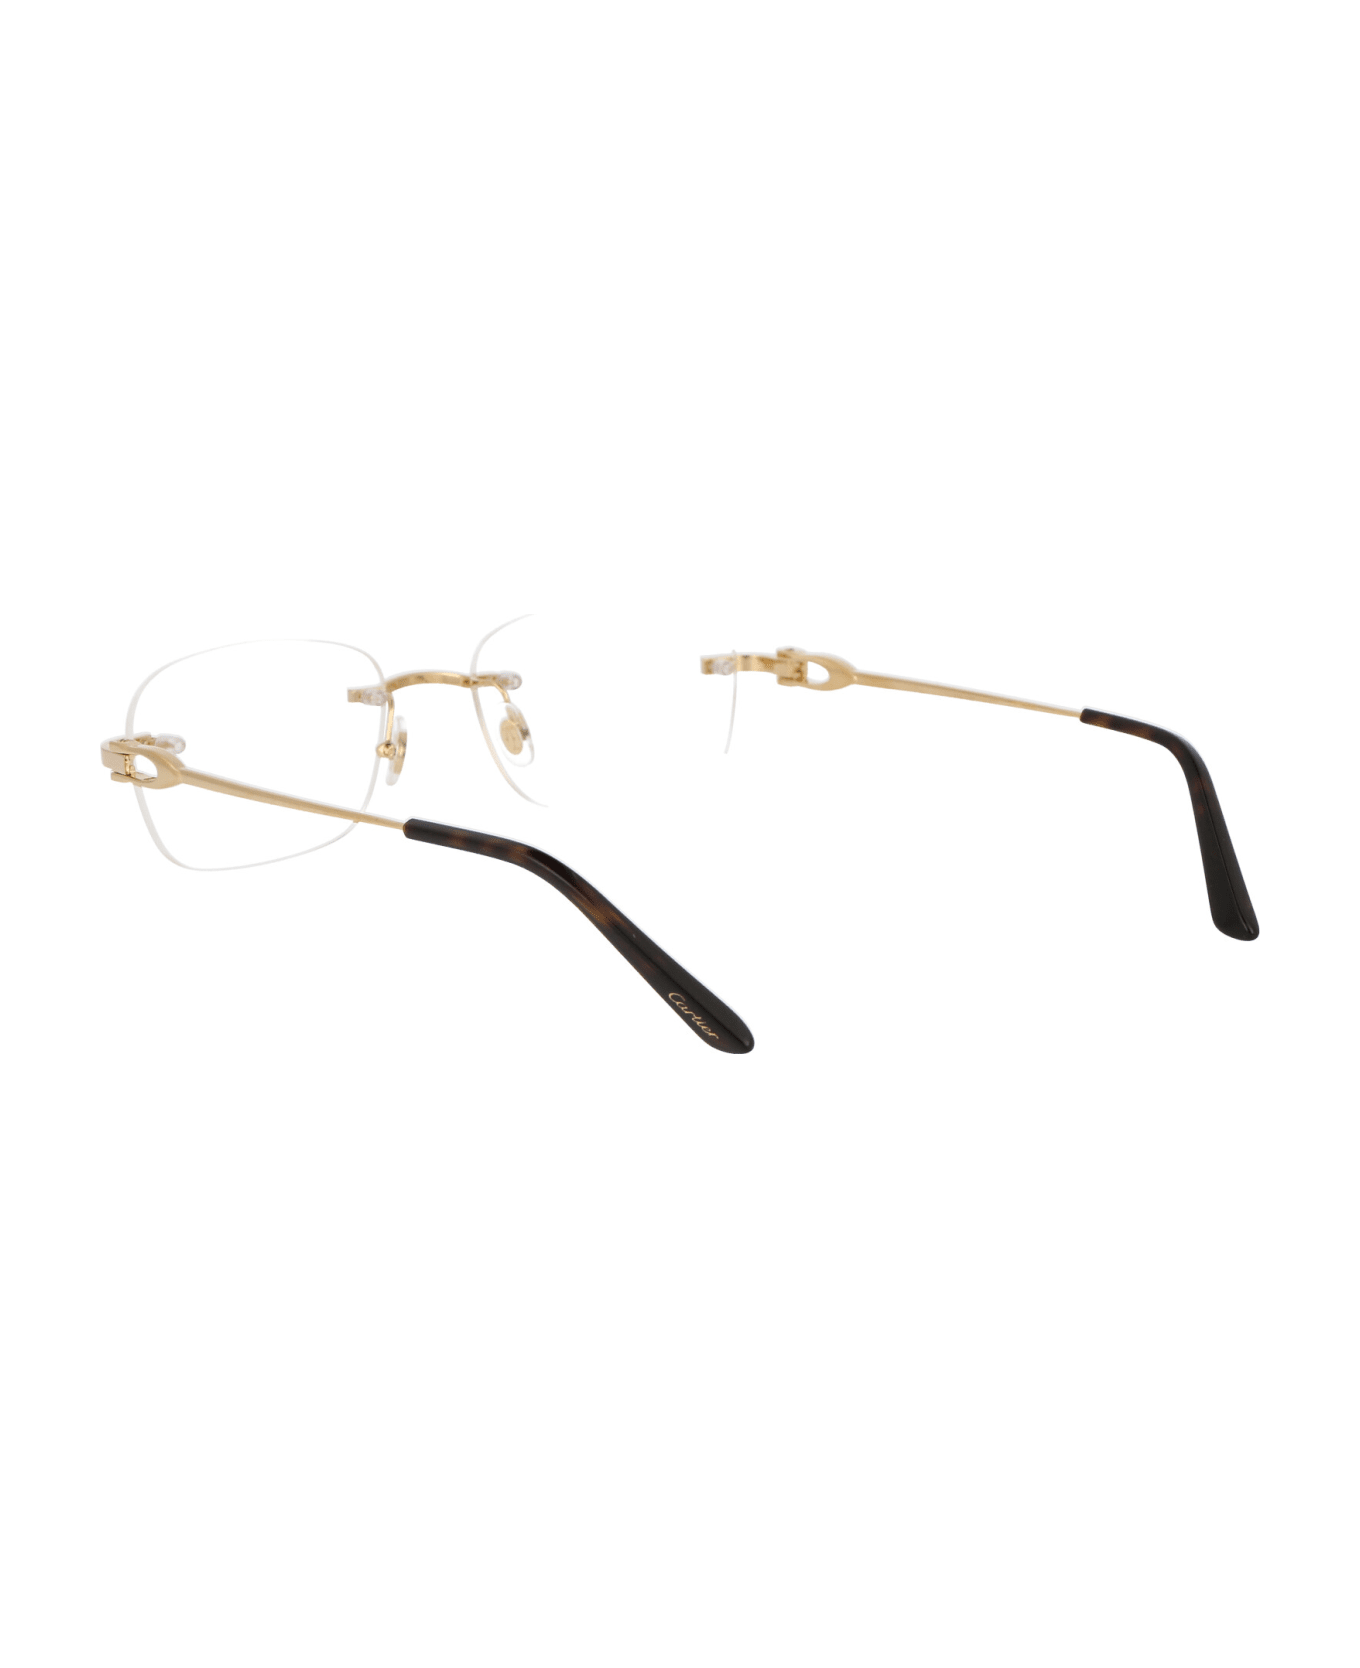 Cartier Eyewear Ct0290o Glasses - 001 GOLD GOLD TRANSPARENT